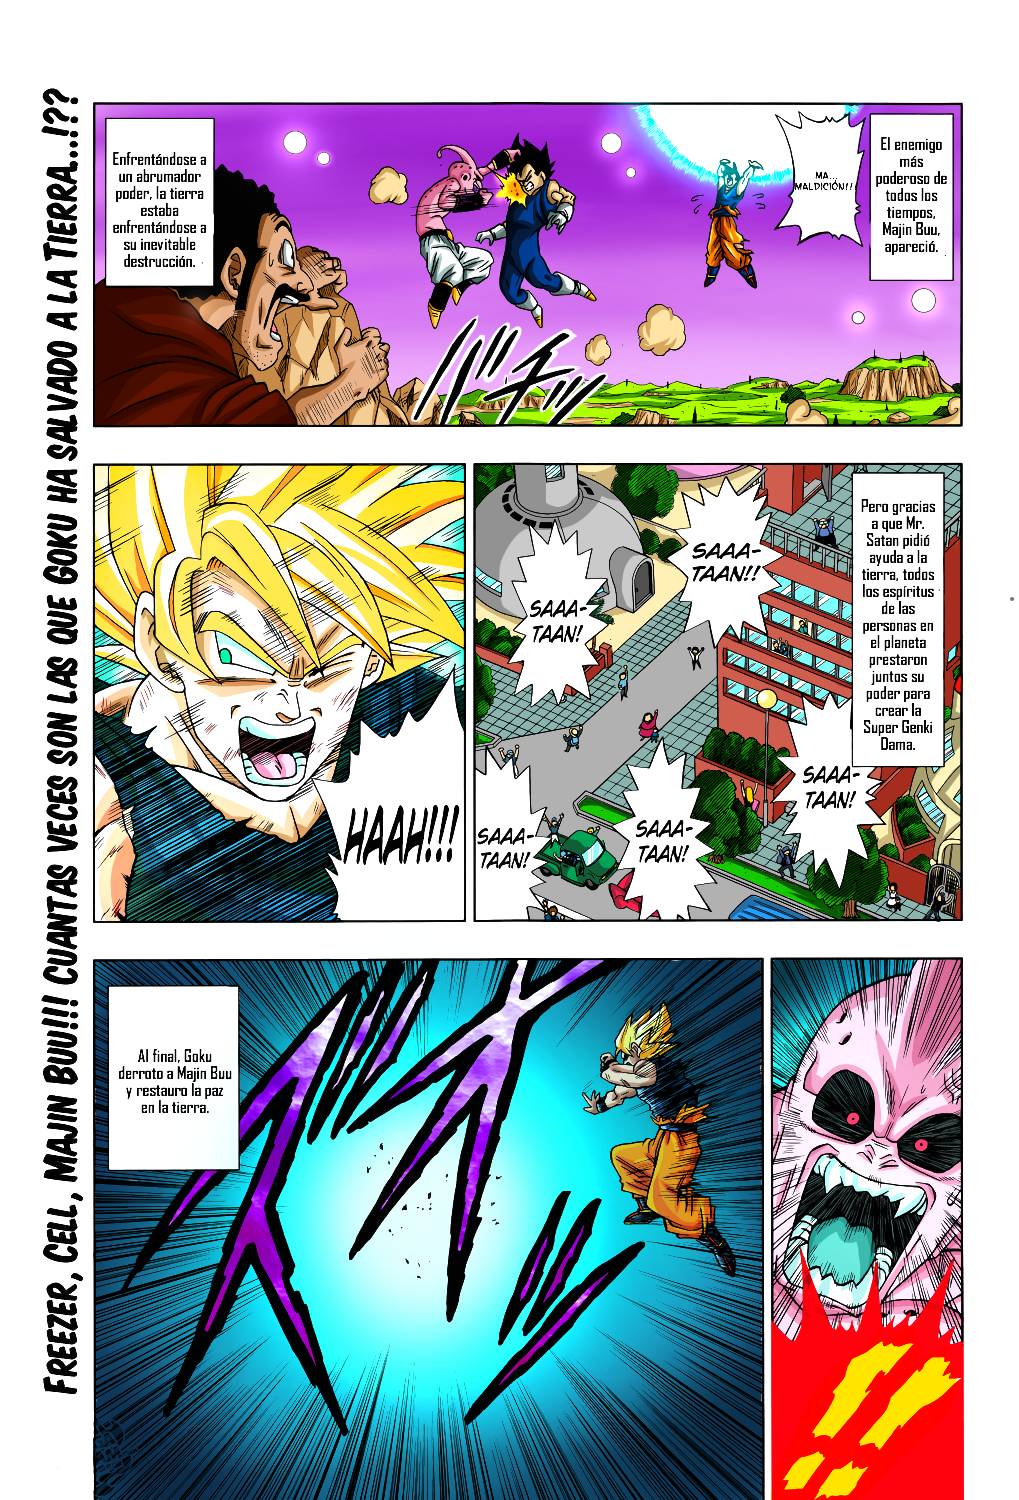 Dragon Ball Super Manga 12 color by bolman2003JUMP on DeviantArt  Anime dragon  ball super, Dragon ball super manga, Dragon ball super